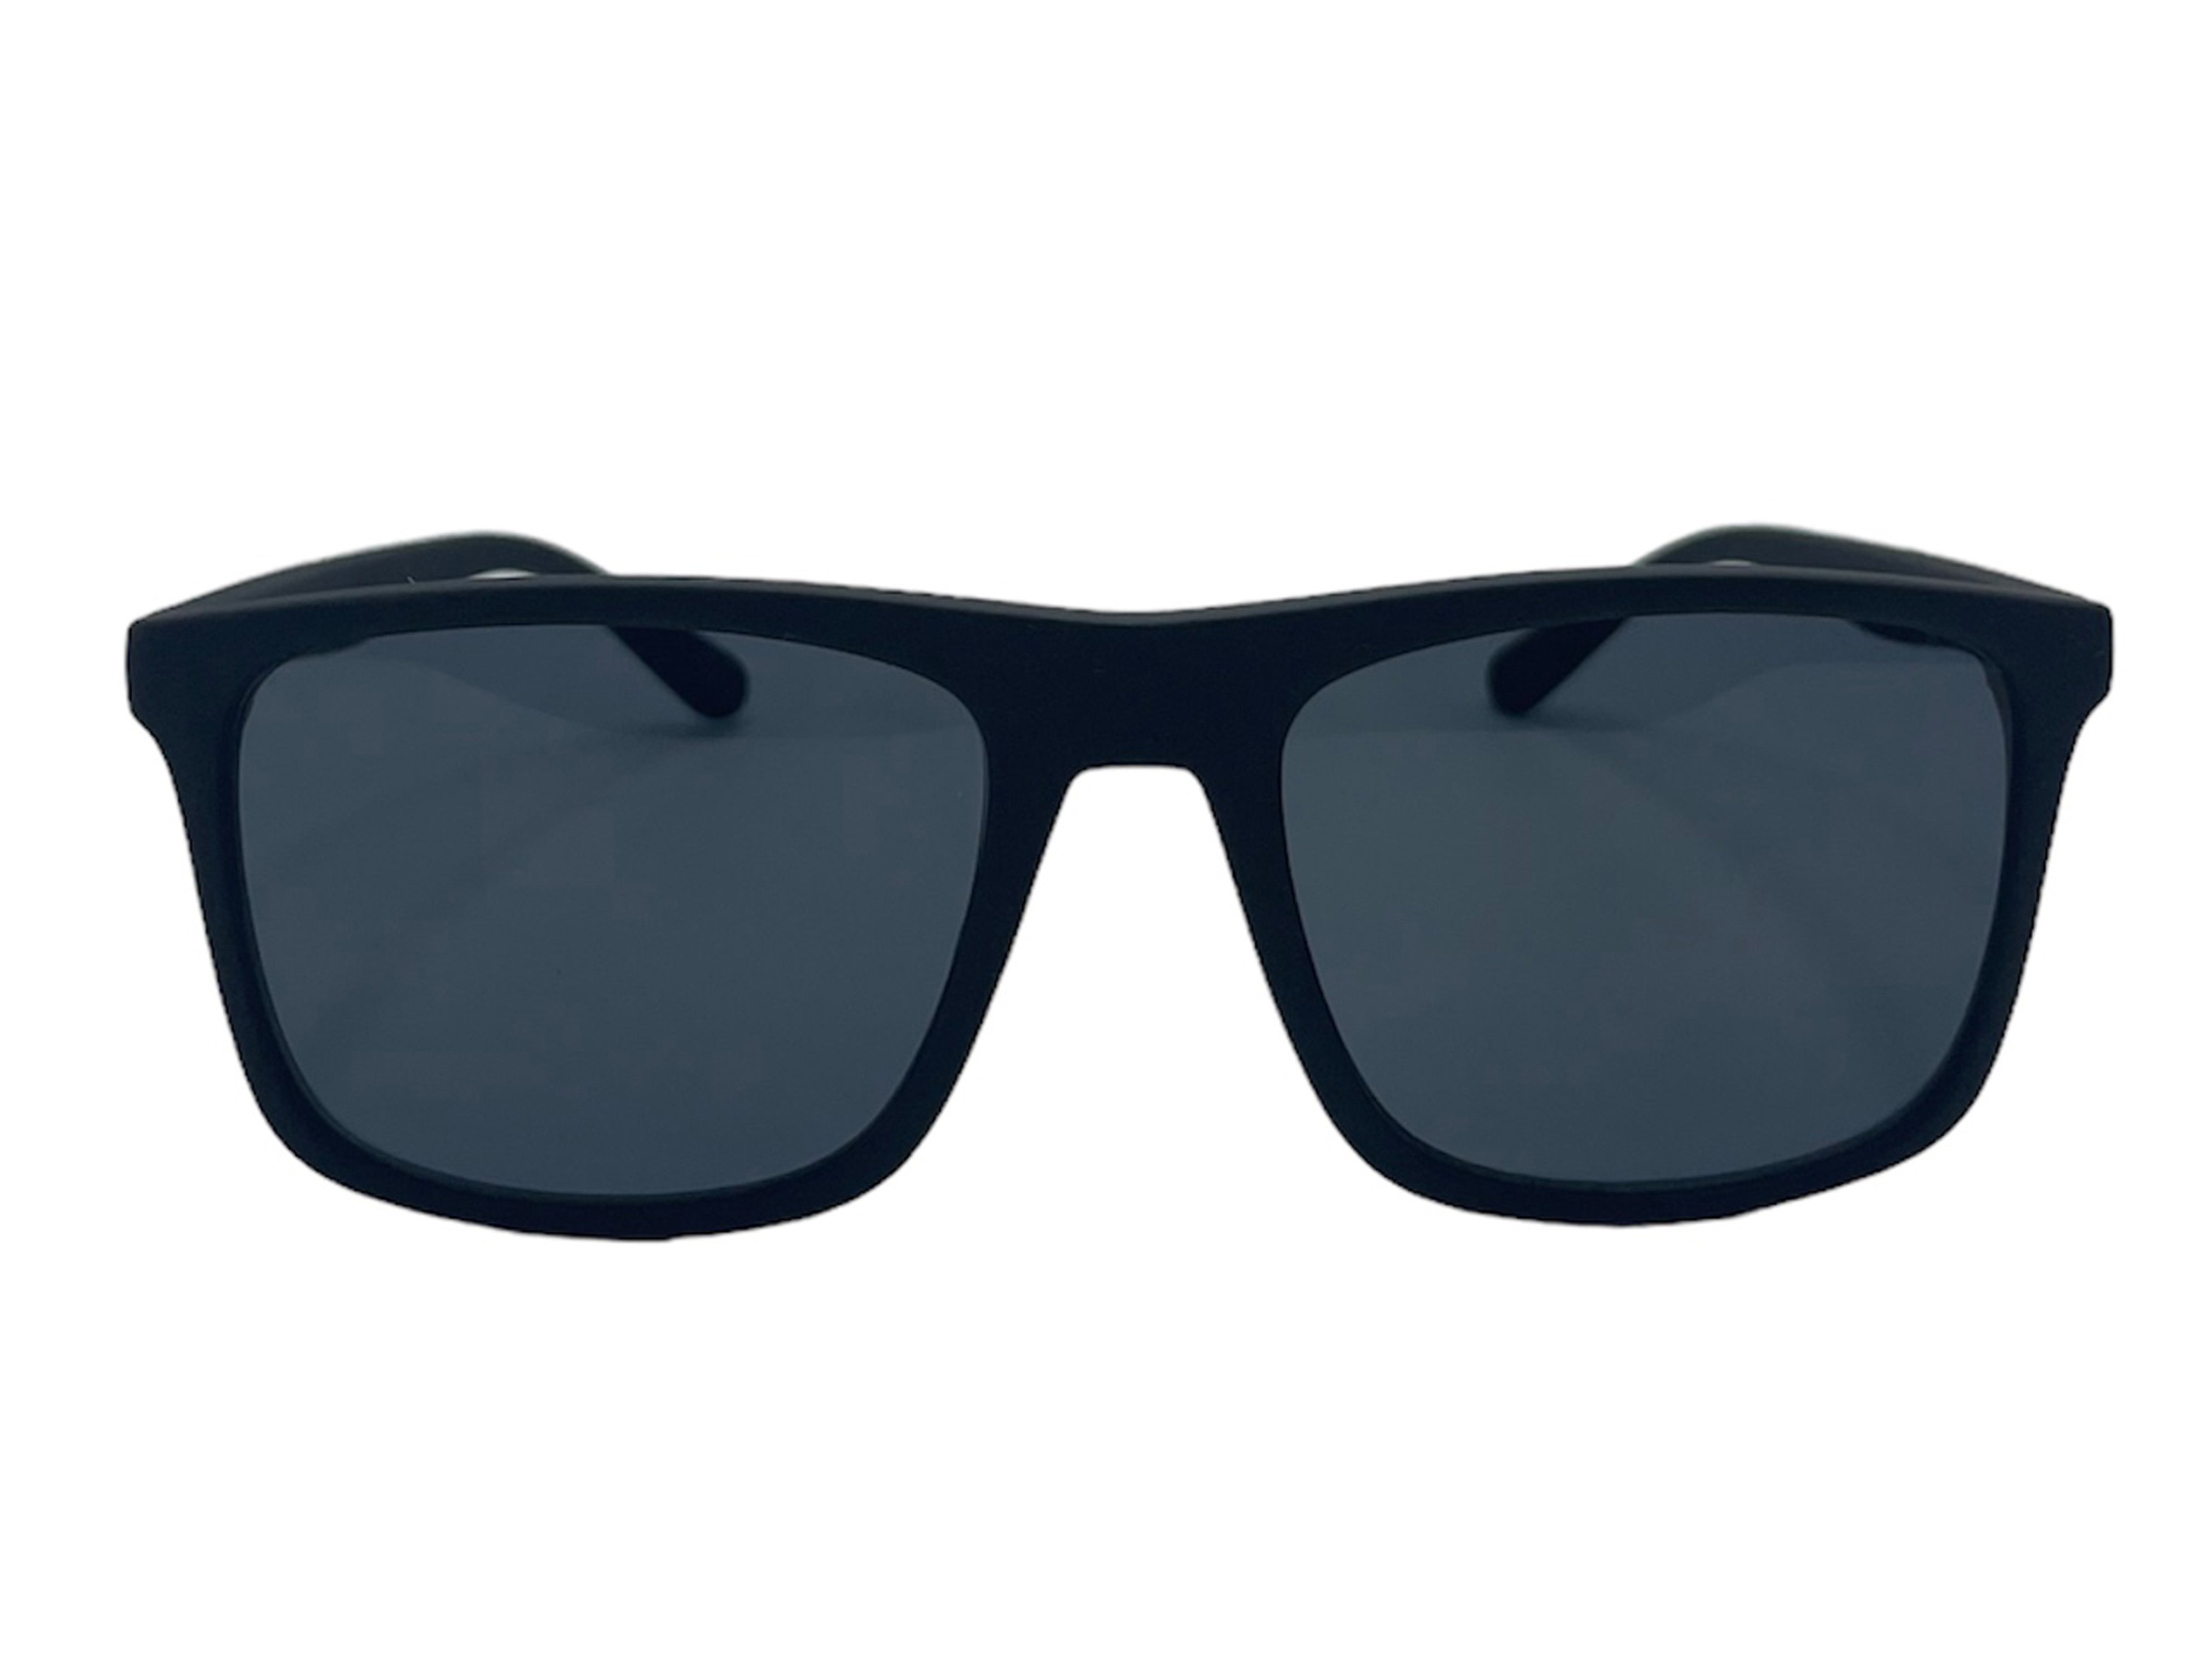 NS Deluxe - 400 - Black - Sunglasses